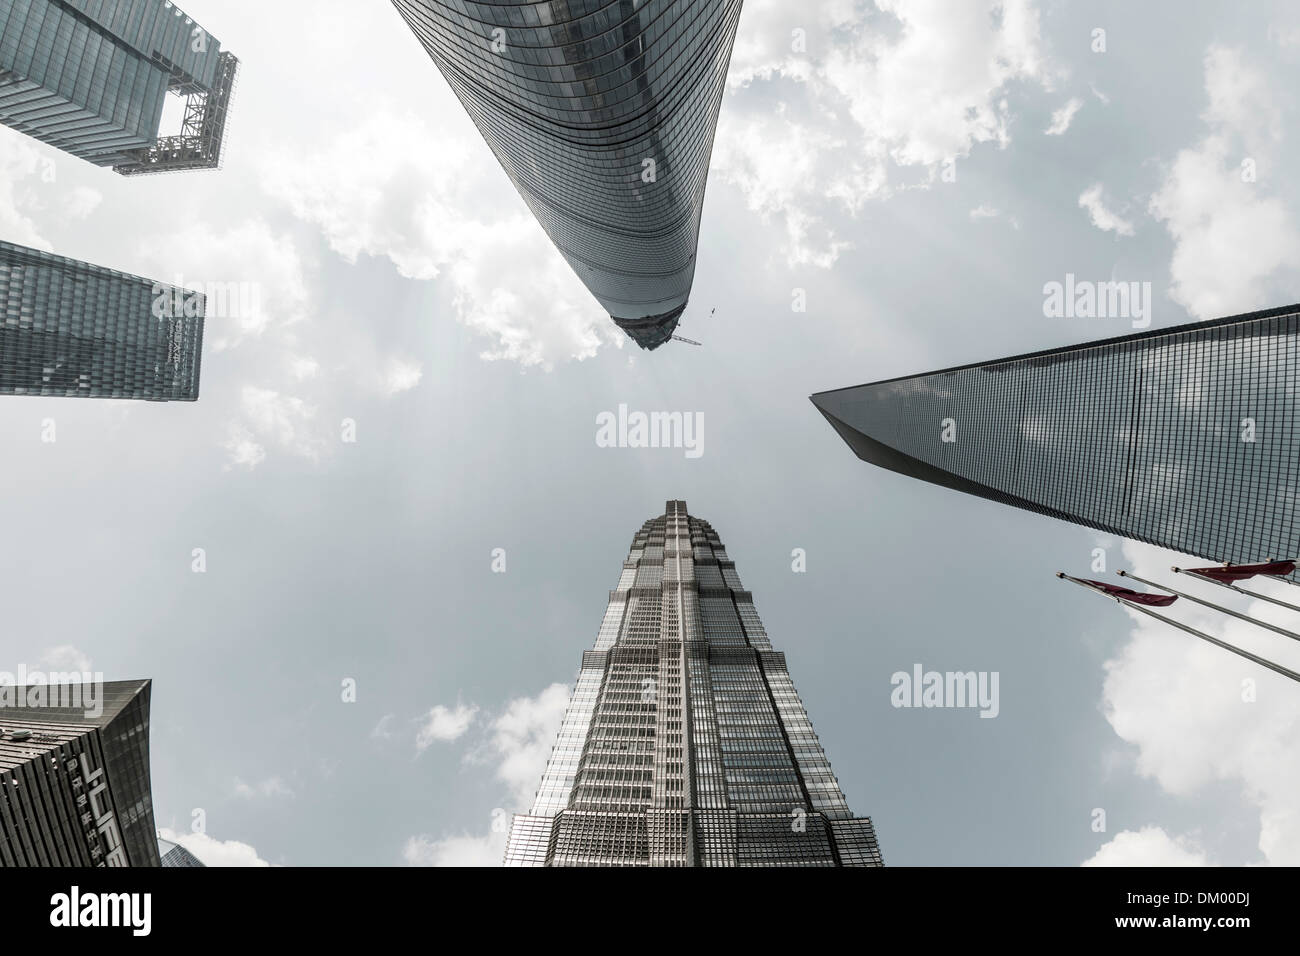 Shanghai Tower, SWFC, Jin Mao Tower, Lujiazui, Pudong, Shanghai, China Stock Photo